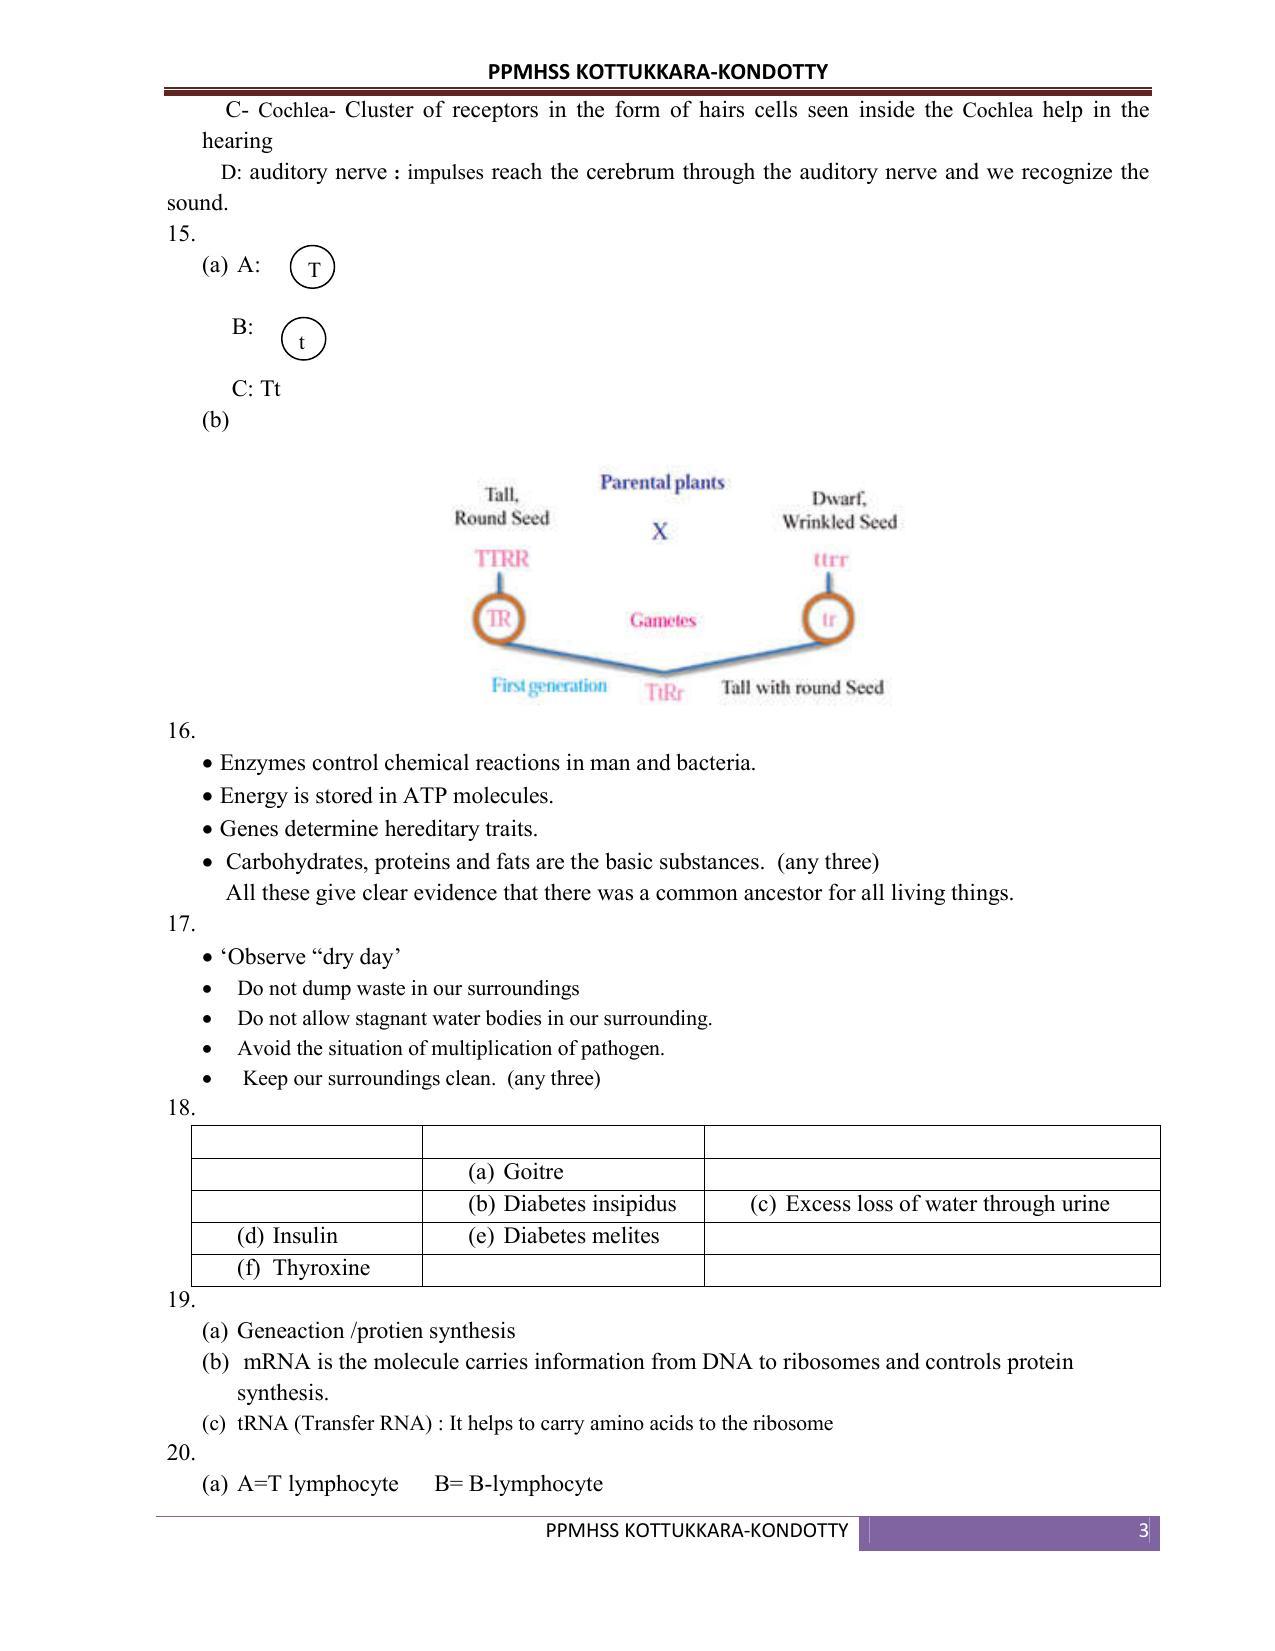 Kerala SSLC 2019  Biology Answer Key (EM) (Model) - Page 3